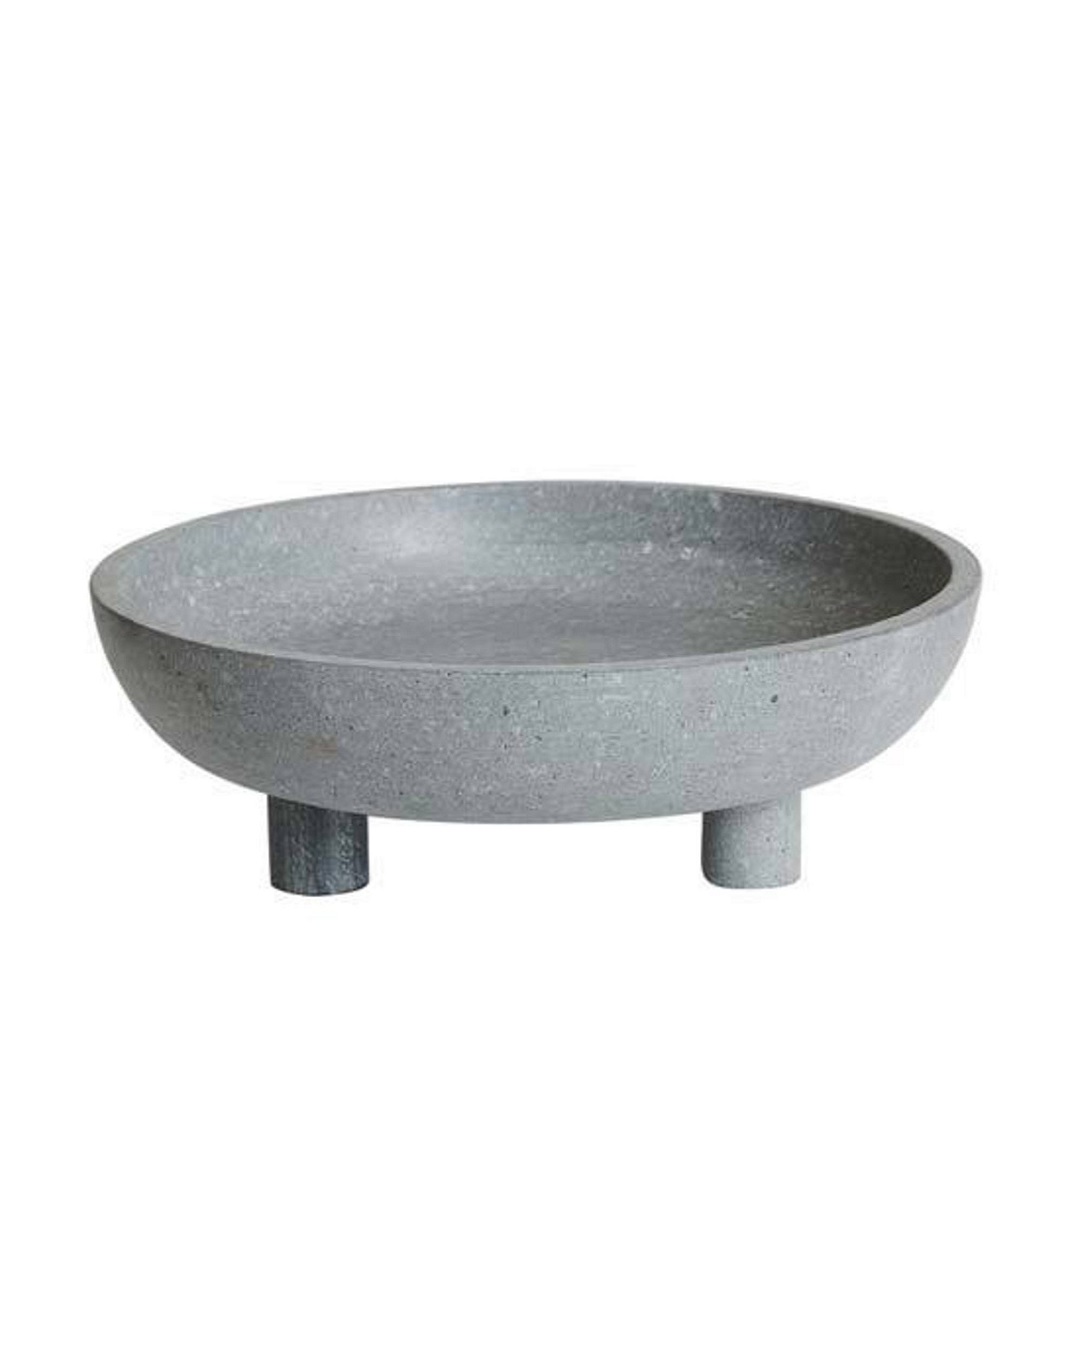 Ridge pillar bowl in grey